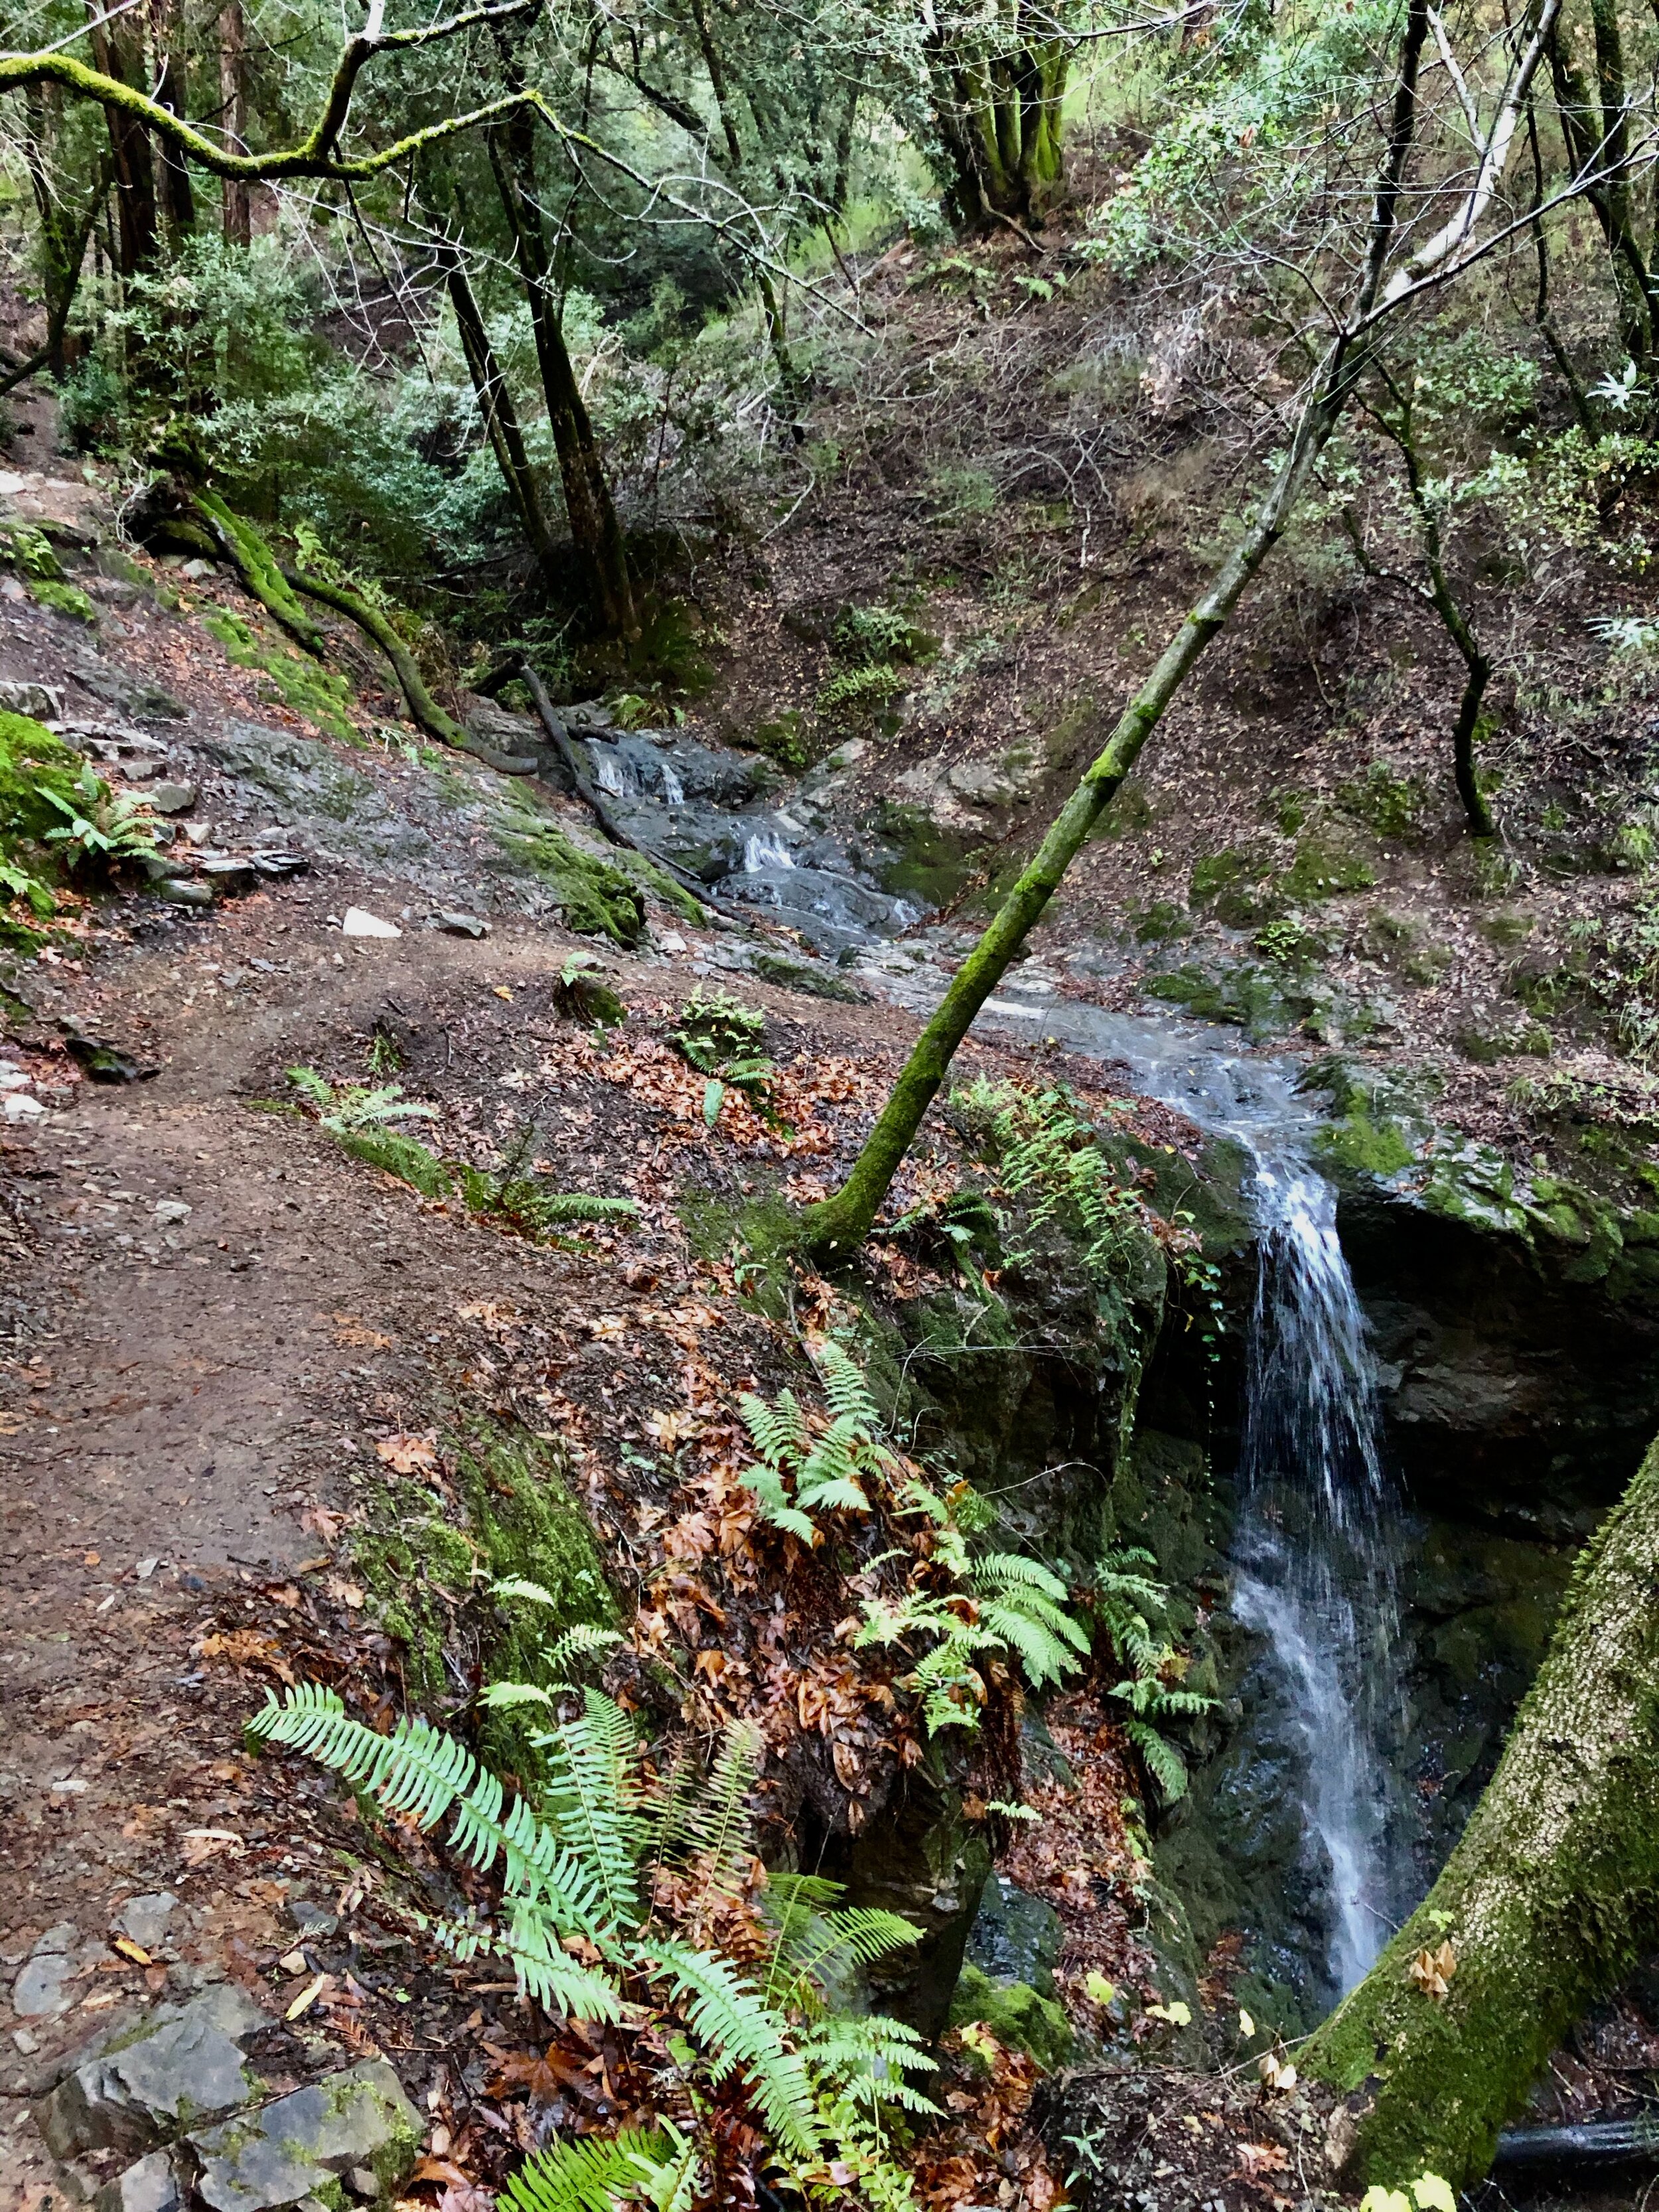 The rains had made a hike down to Dawn Falls a worthwhile adventure.